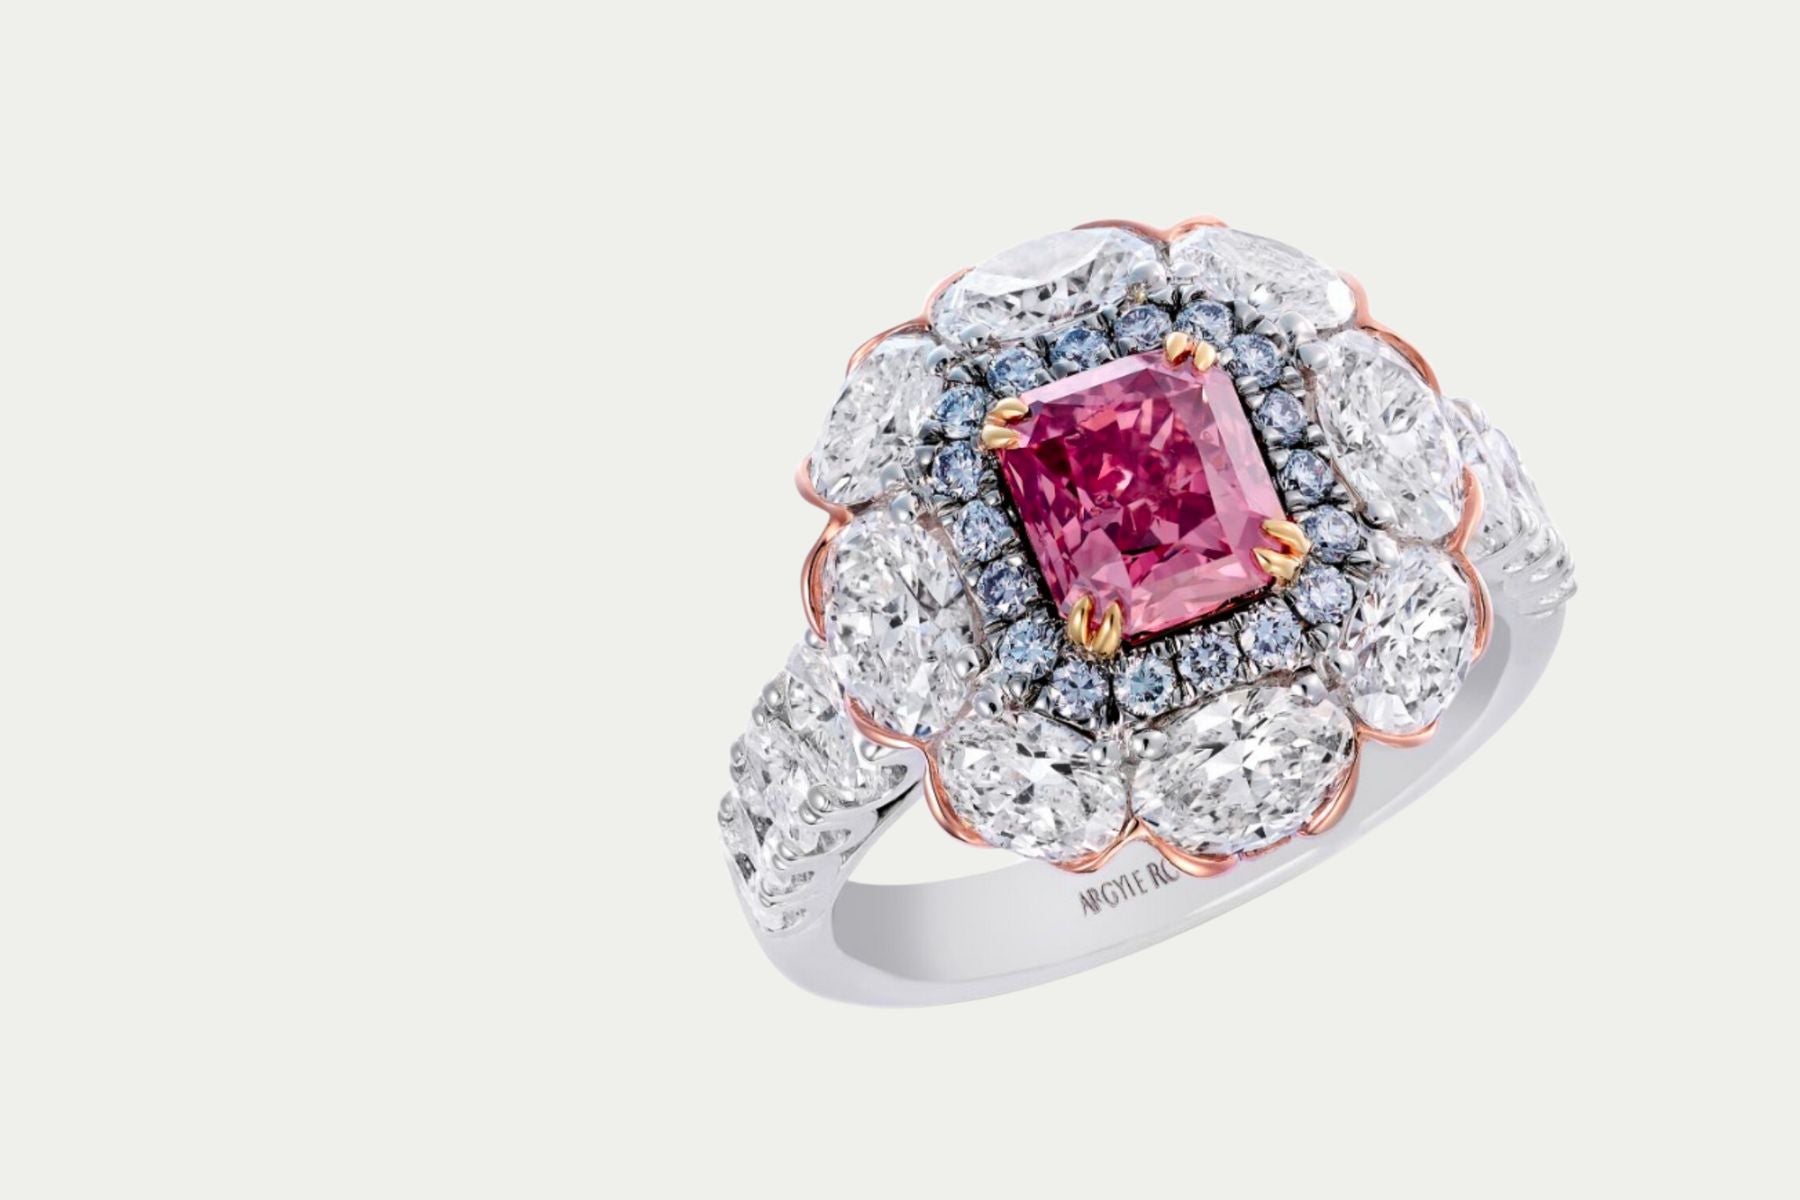 Rio Tinto unveils iconic A$2 million Argyle RoseTM jewellery piece